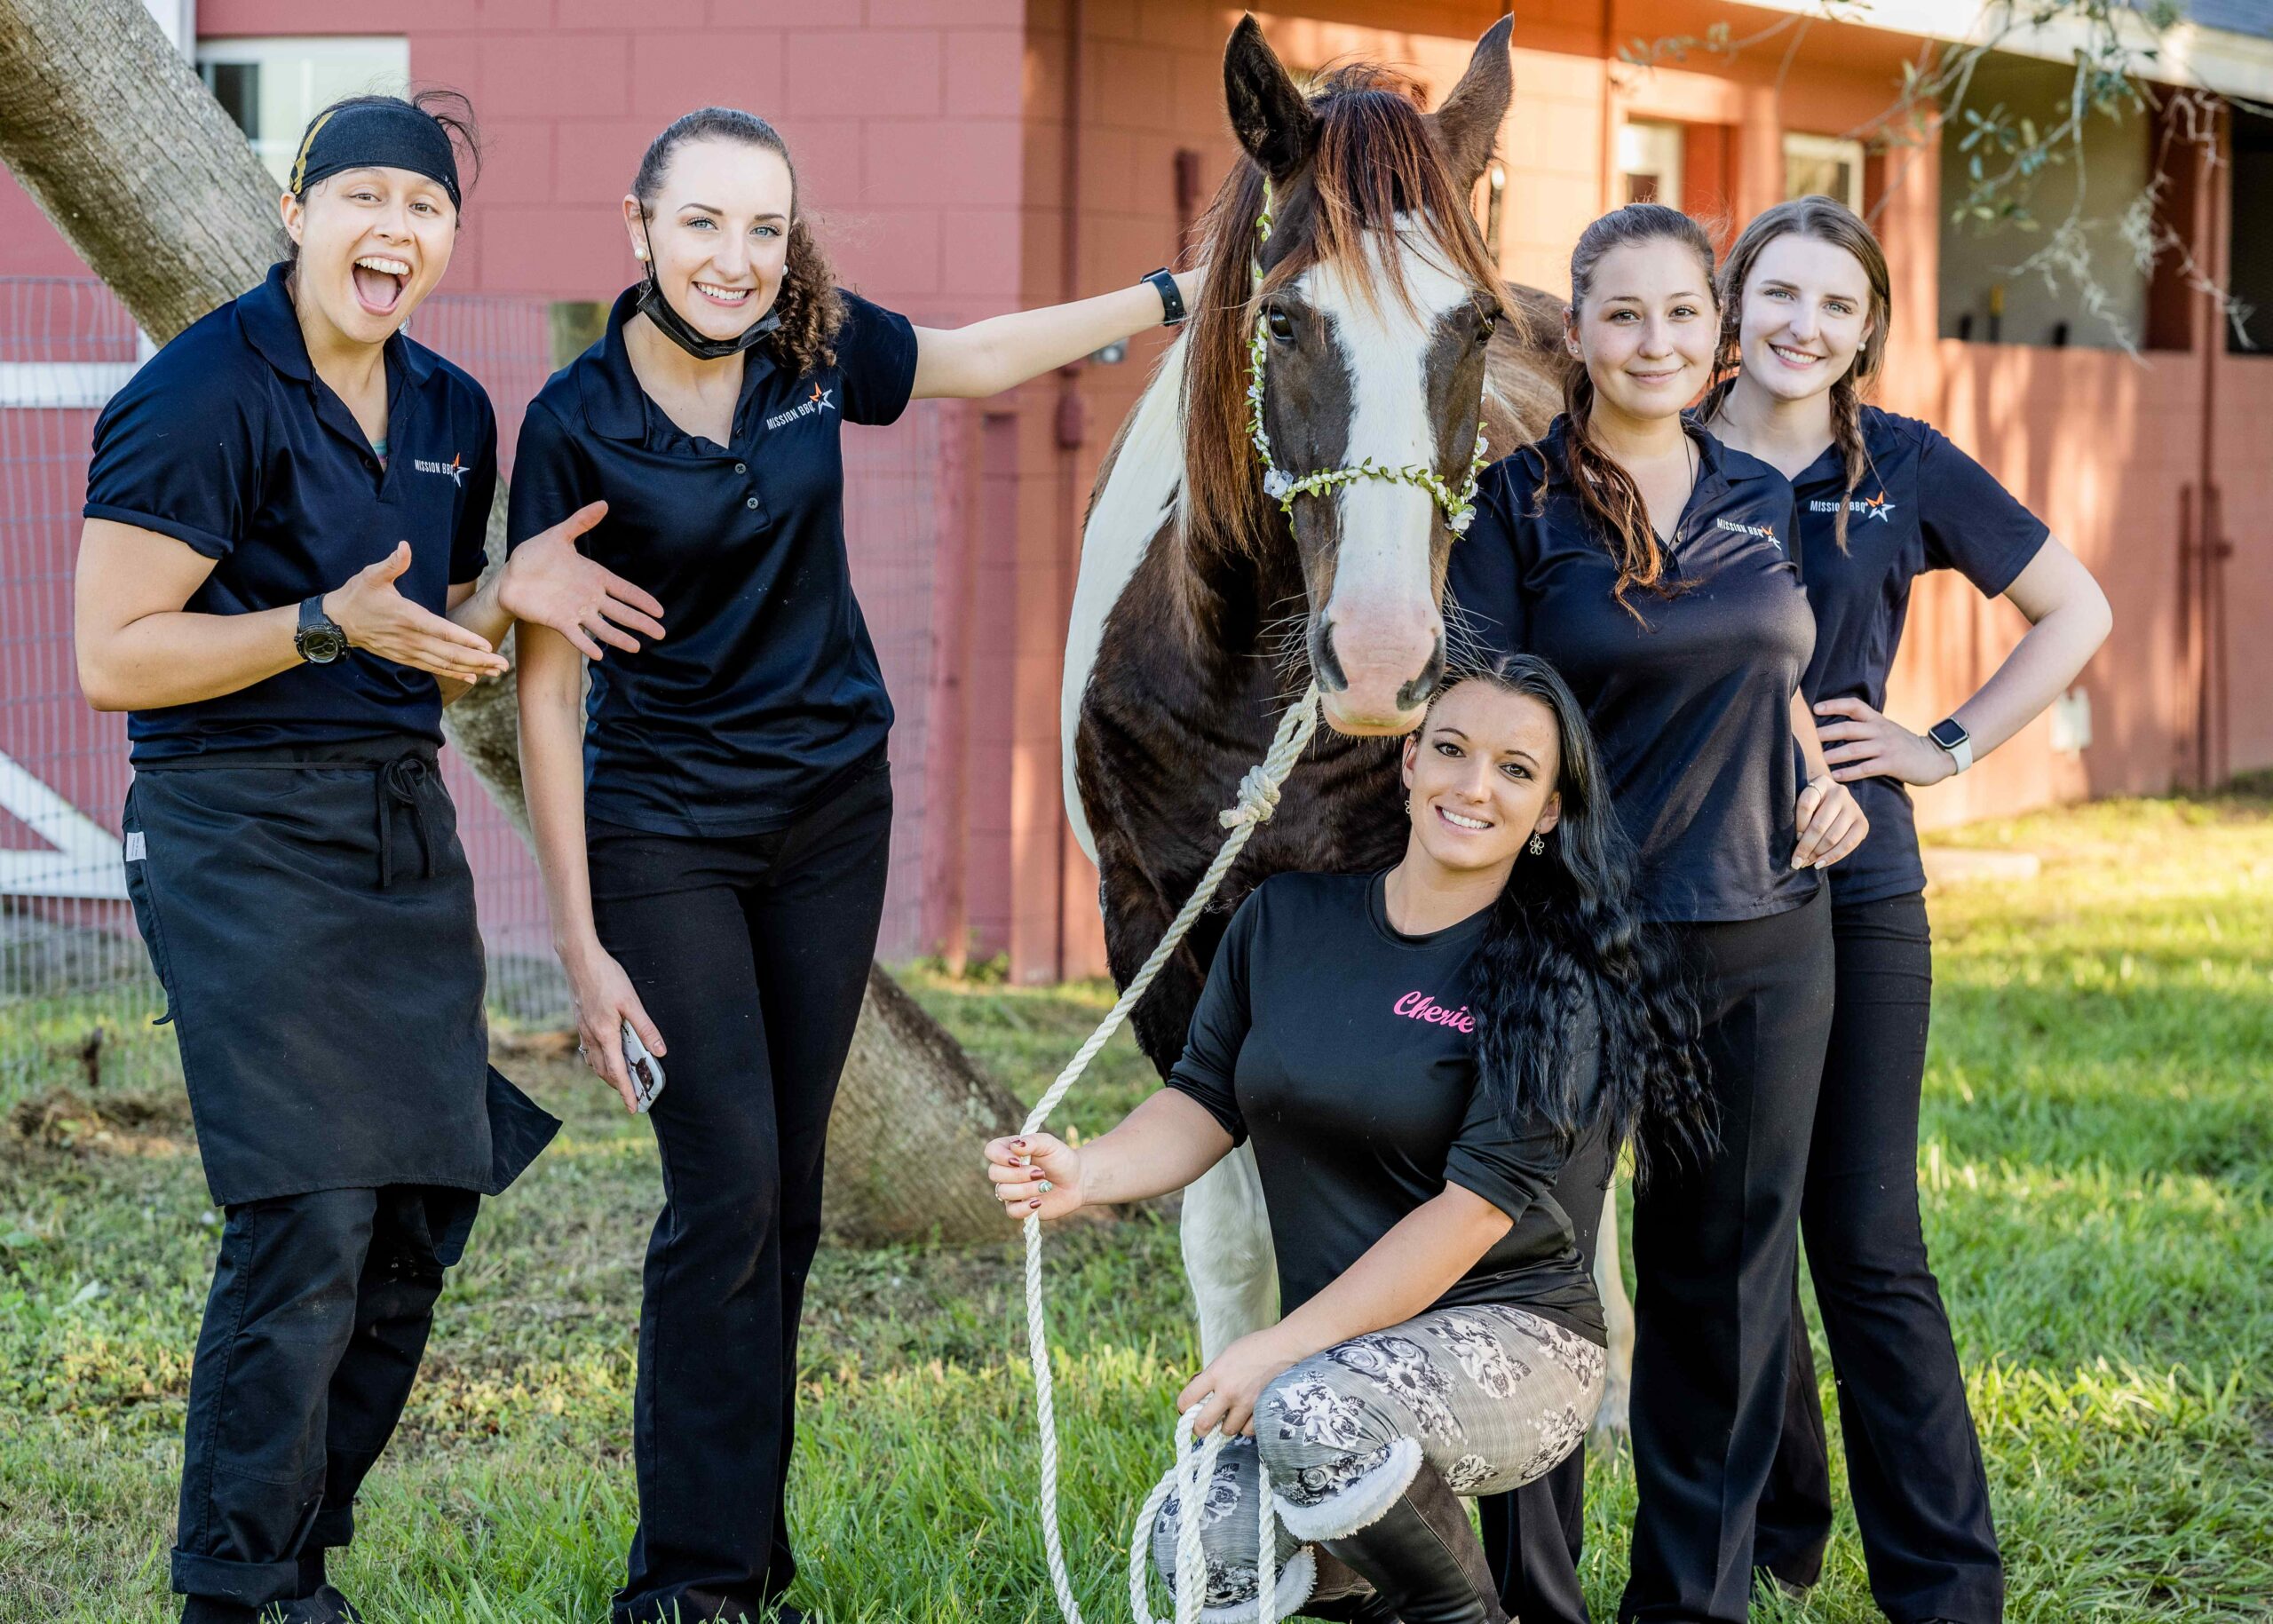 Florida Wedding - A group of women posing for a photo with a horse at a Florida wedding venue.